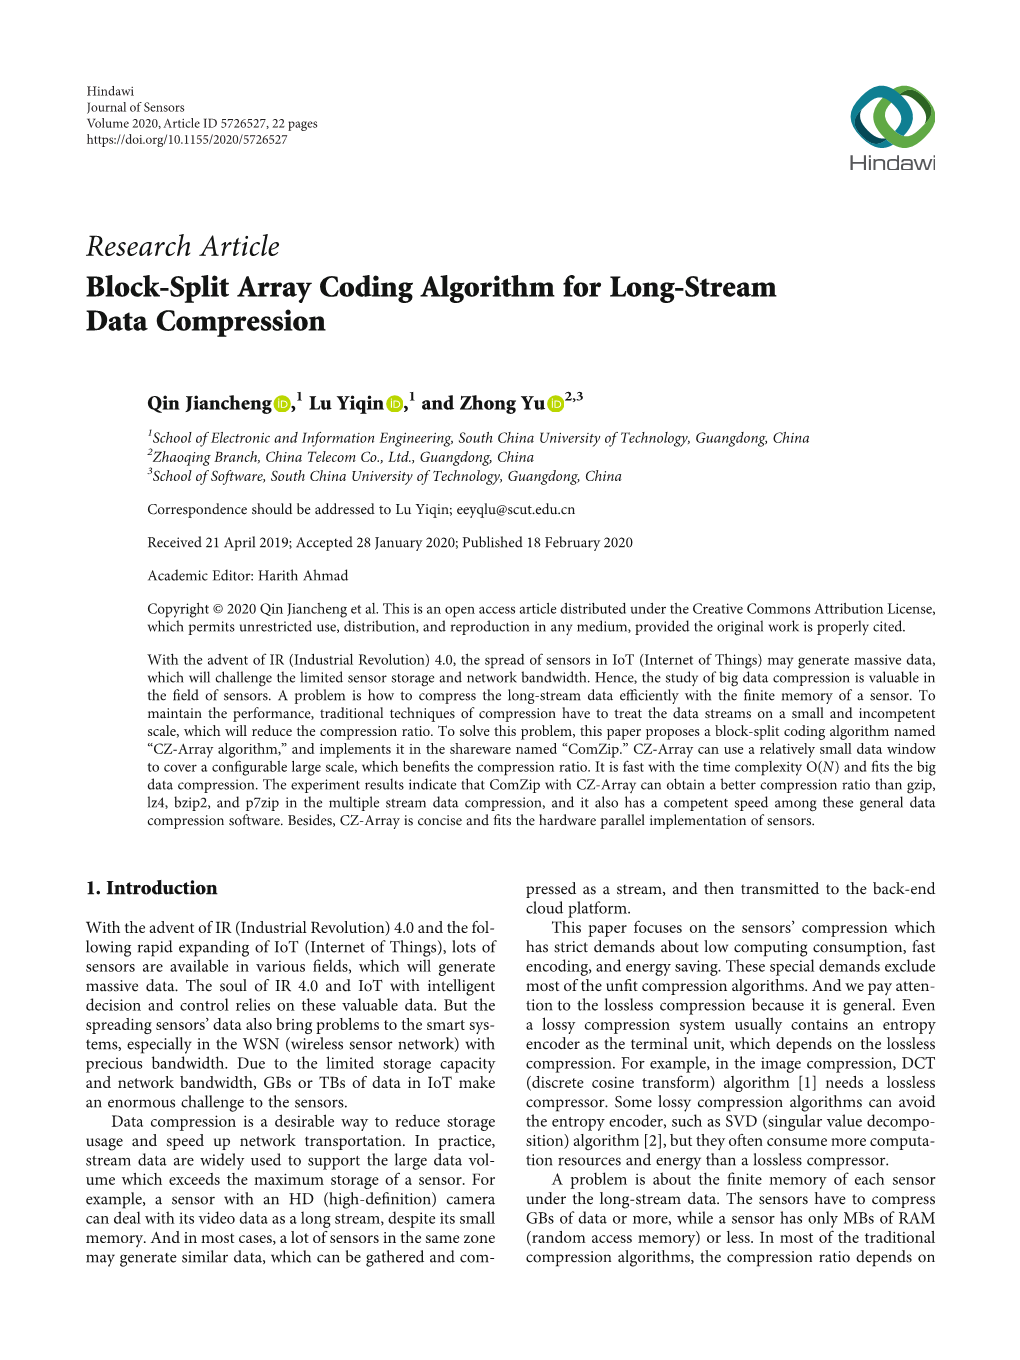 Block-Split Array Coding Algorithm for Long-Stream Data Compression